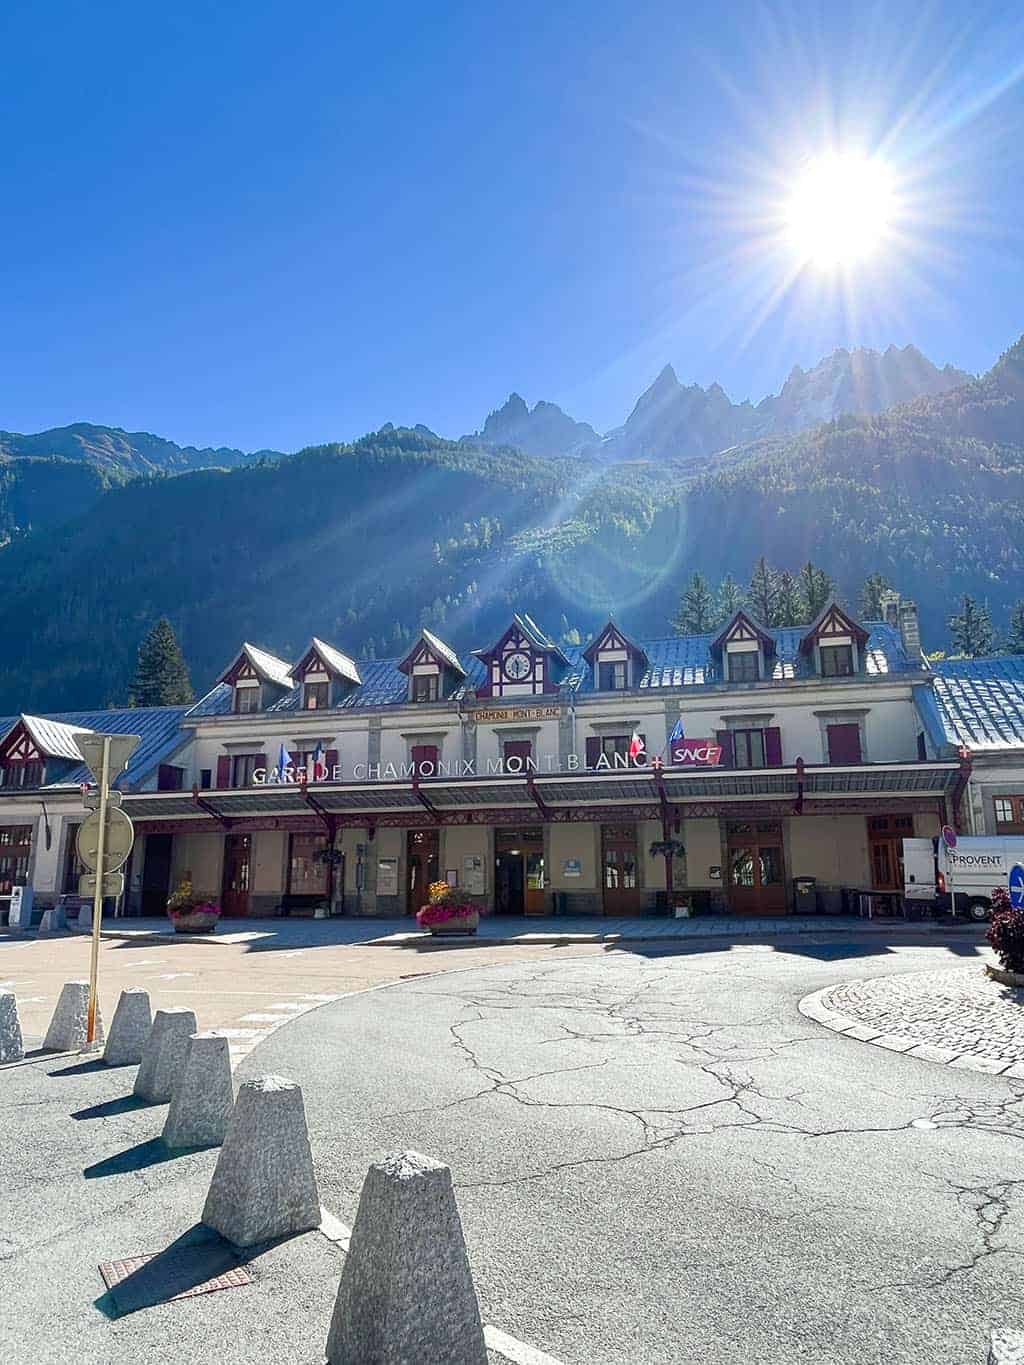 Train from Grindelwald Switzerland to Chamonix France